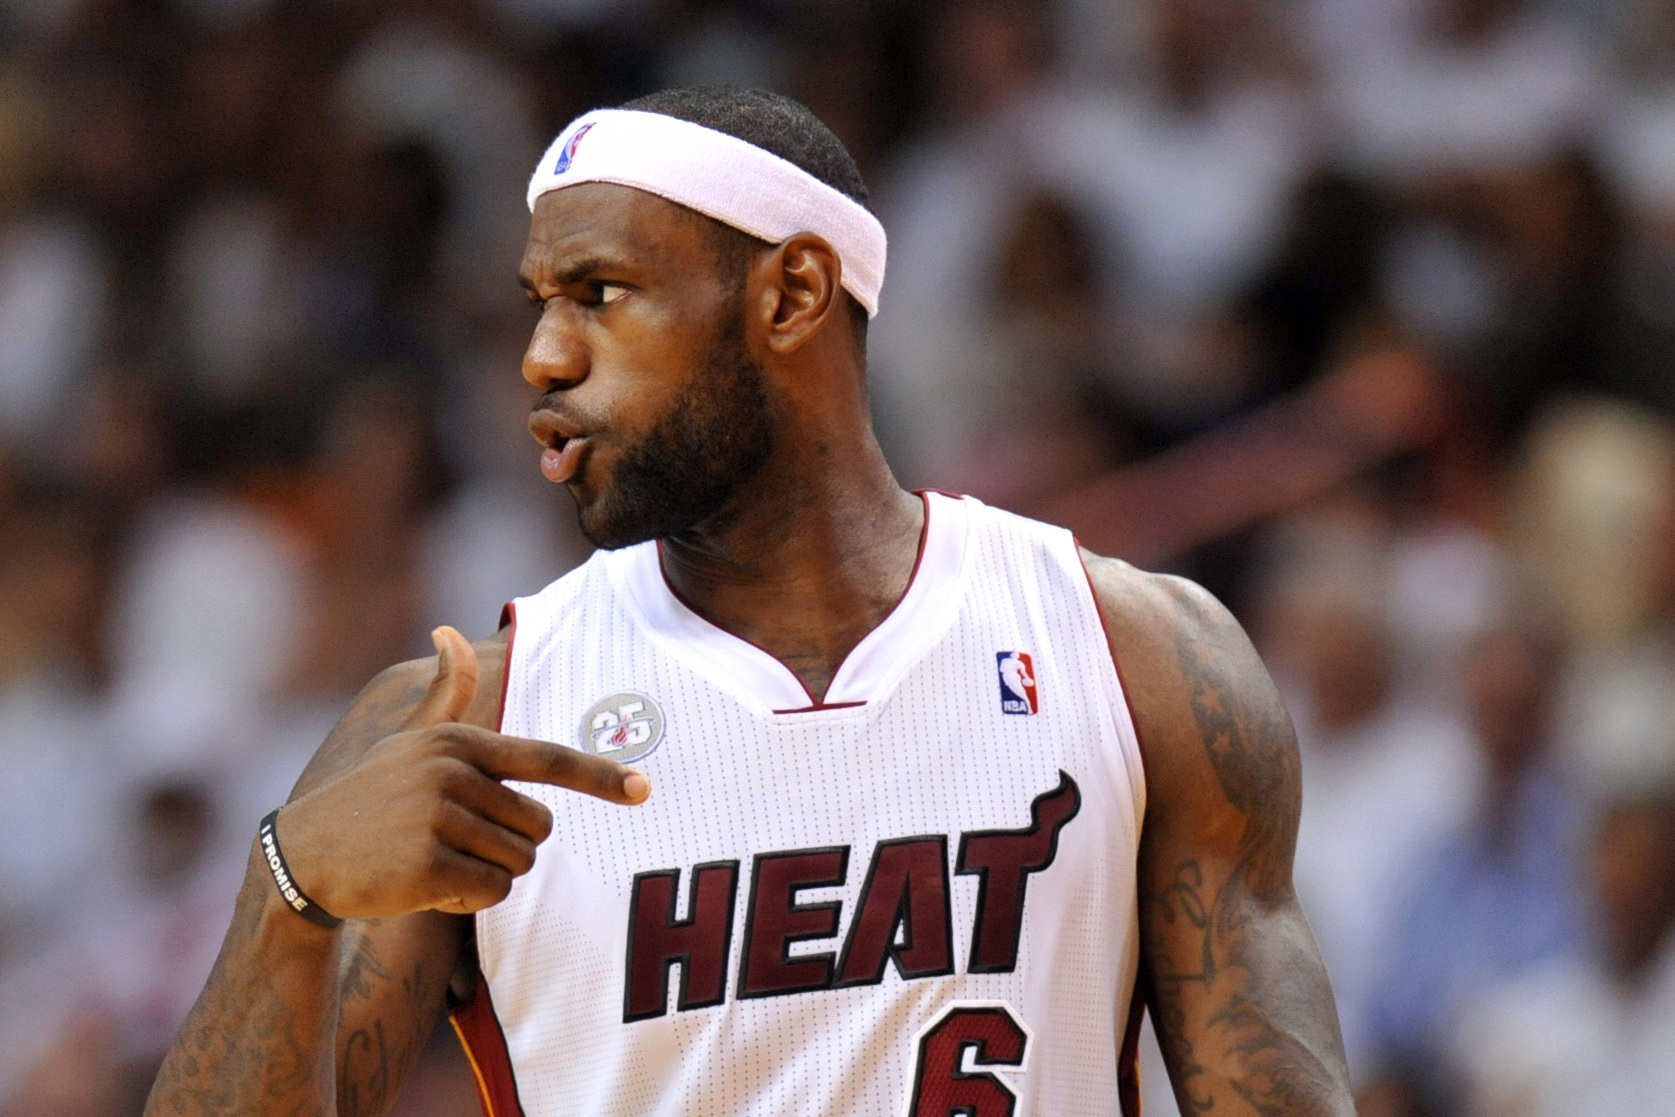 Miami Heat's LeBron James enjoying best offensive start of his career